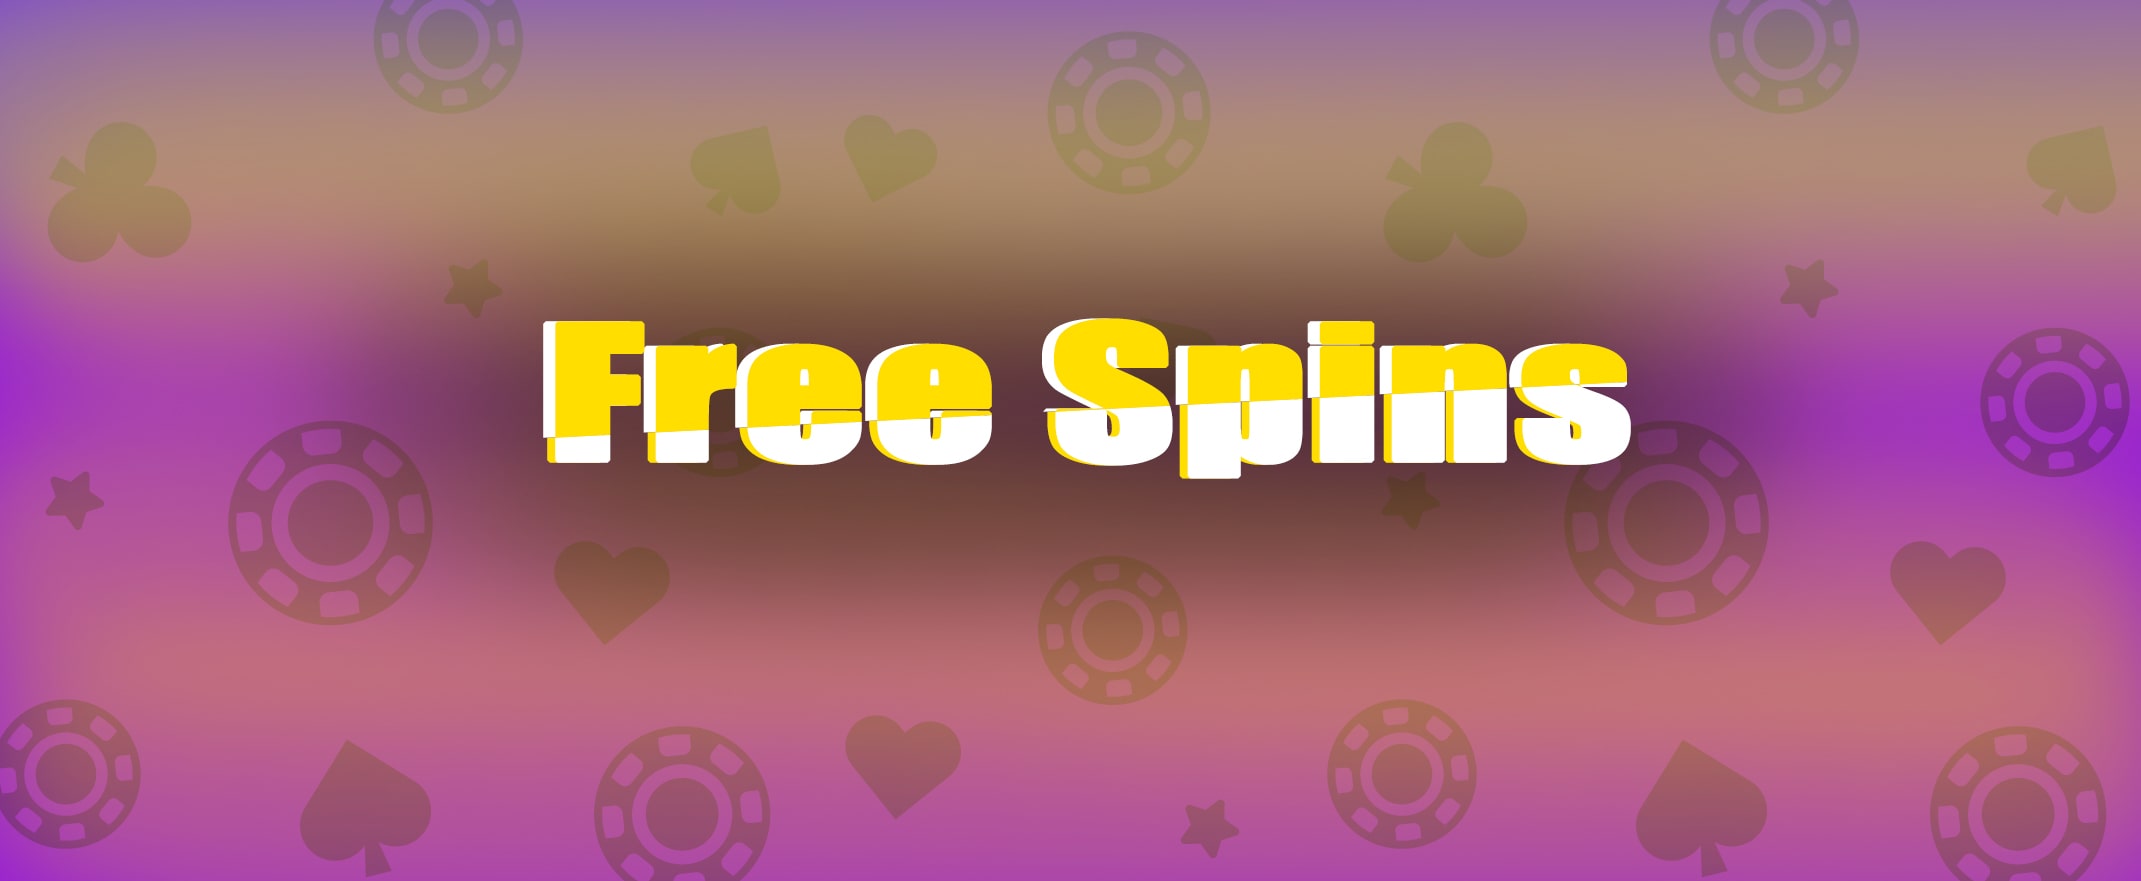 btc casino free spins